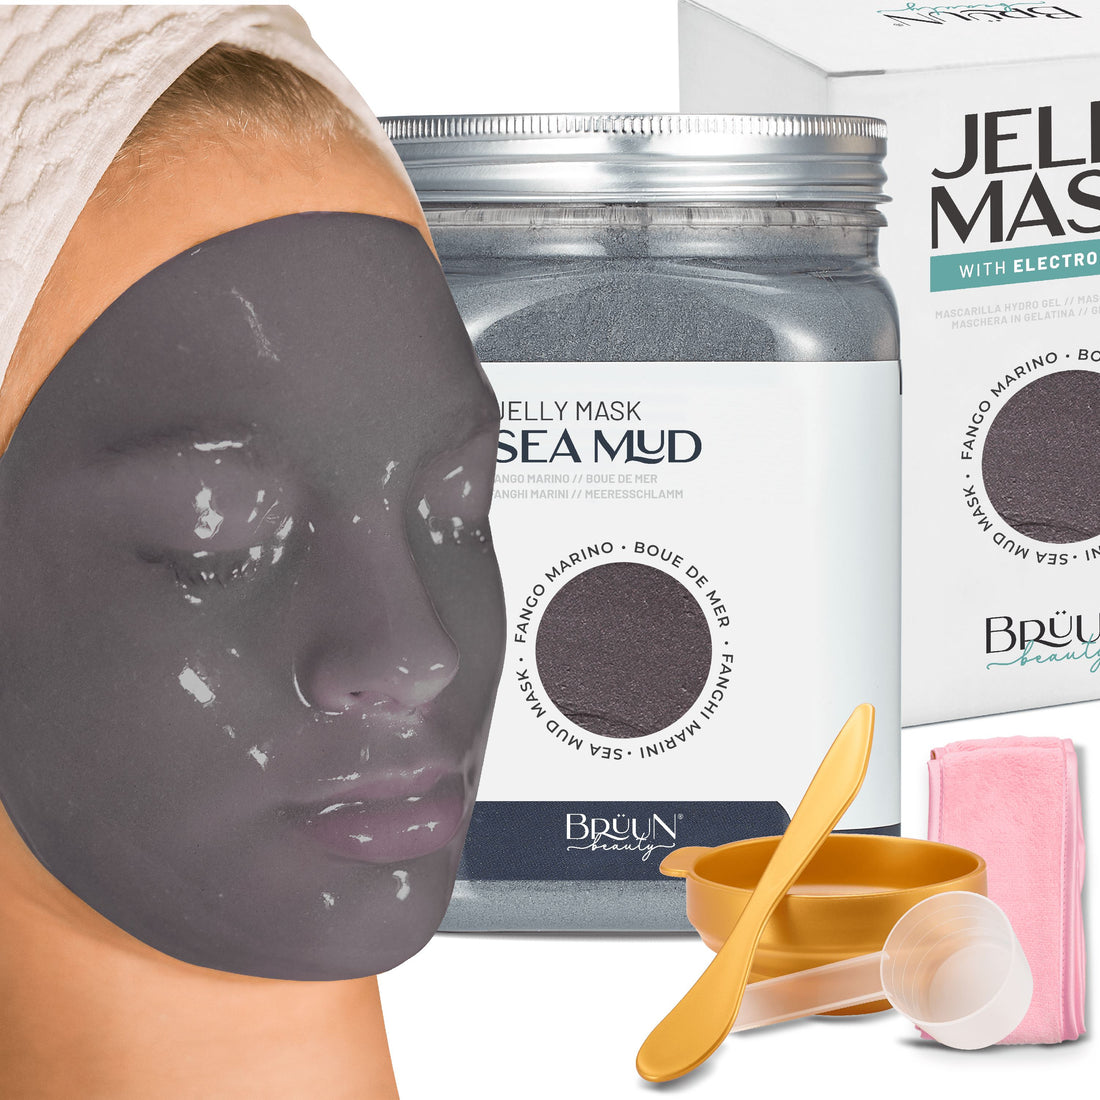 Sea Mud Jelly Mask Jar Face Care Rubber Mask SH-Sea Mud Jar Bruun Beauty 